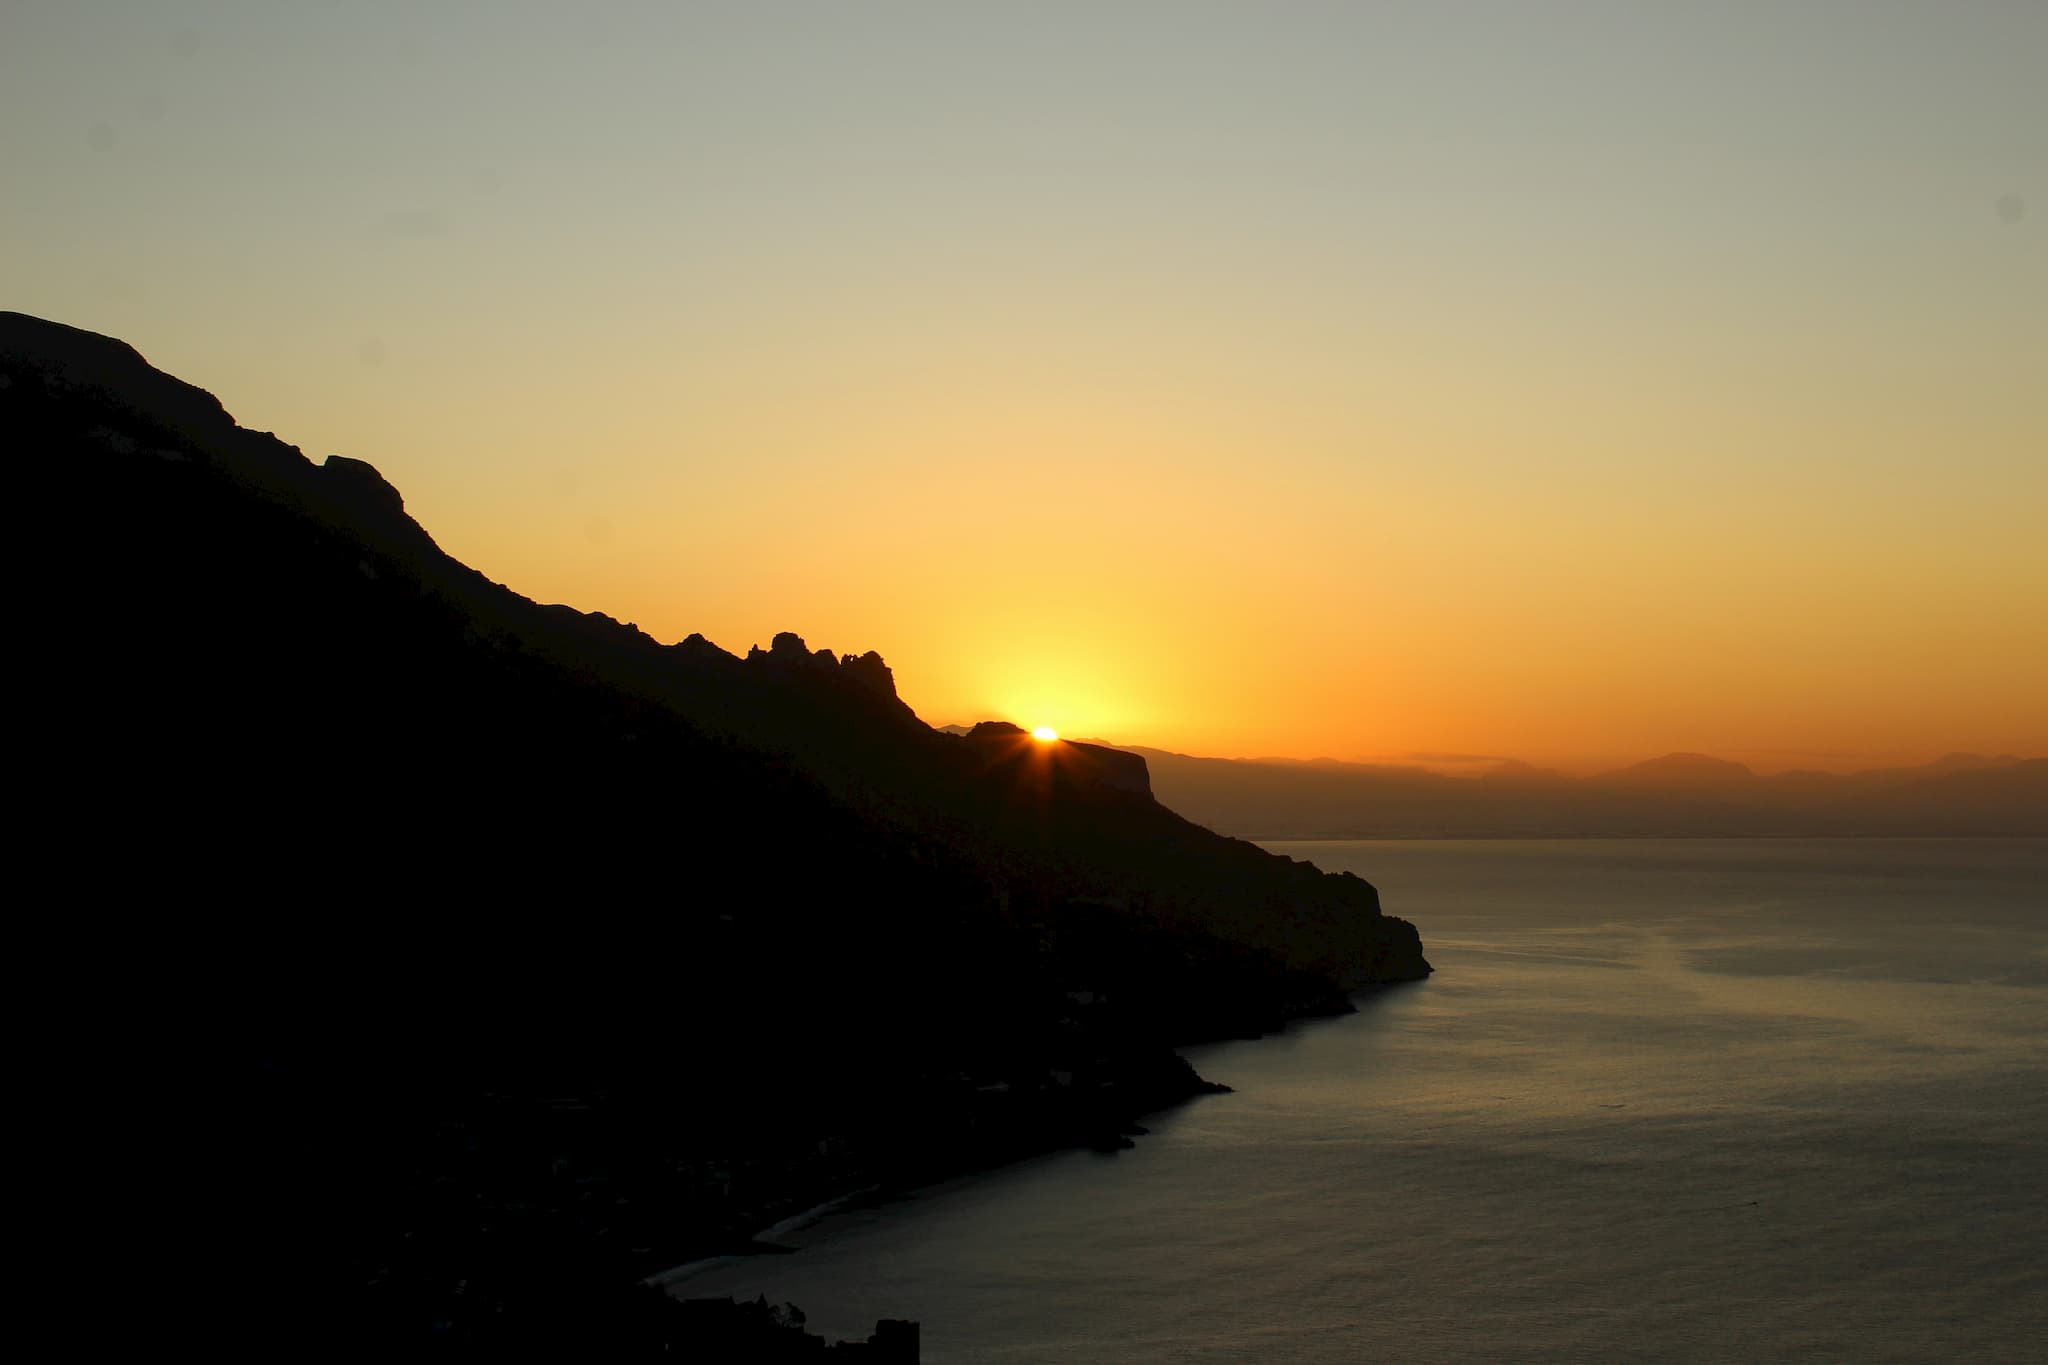 Silhouette of a coastal hillside with the sun peeking over a ridge